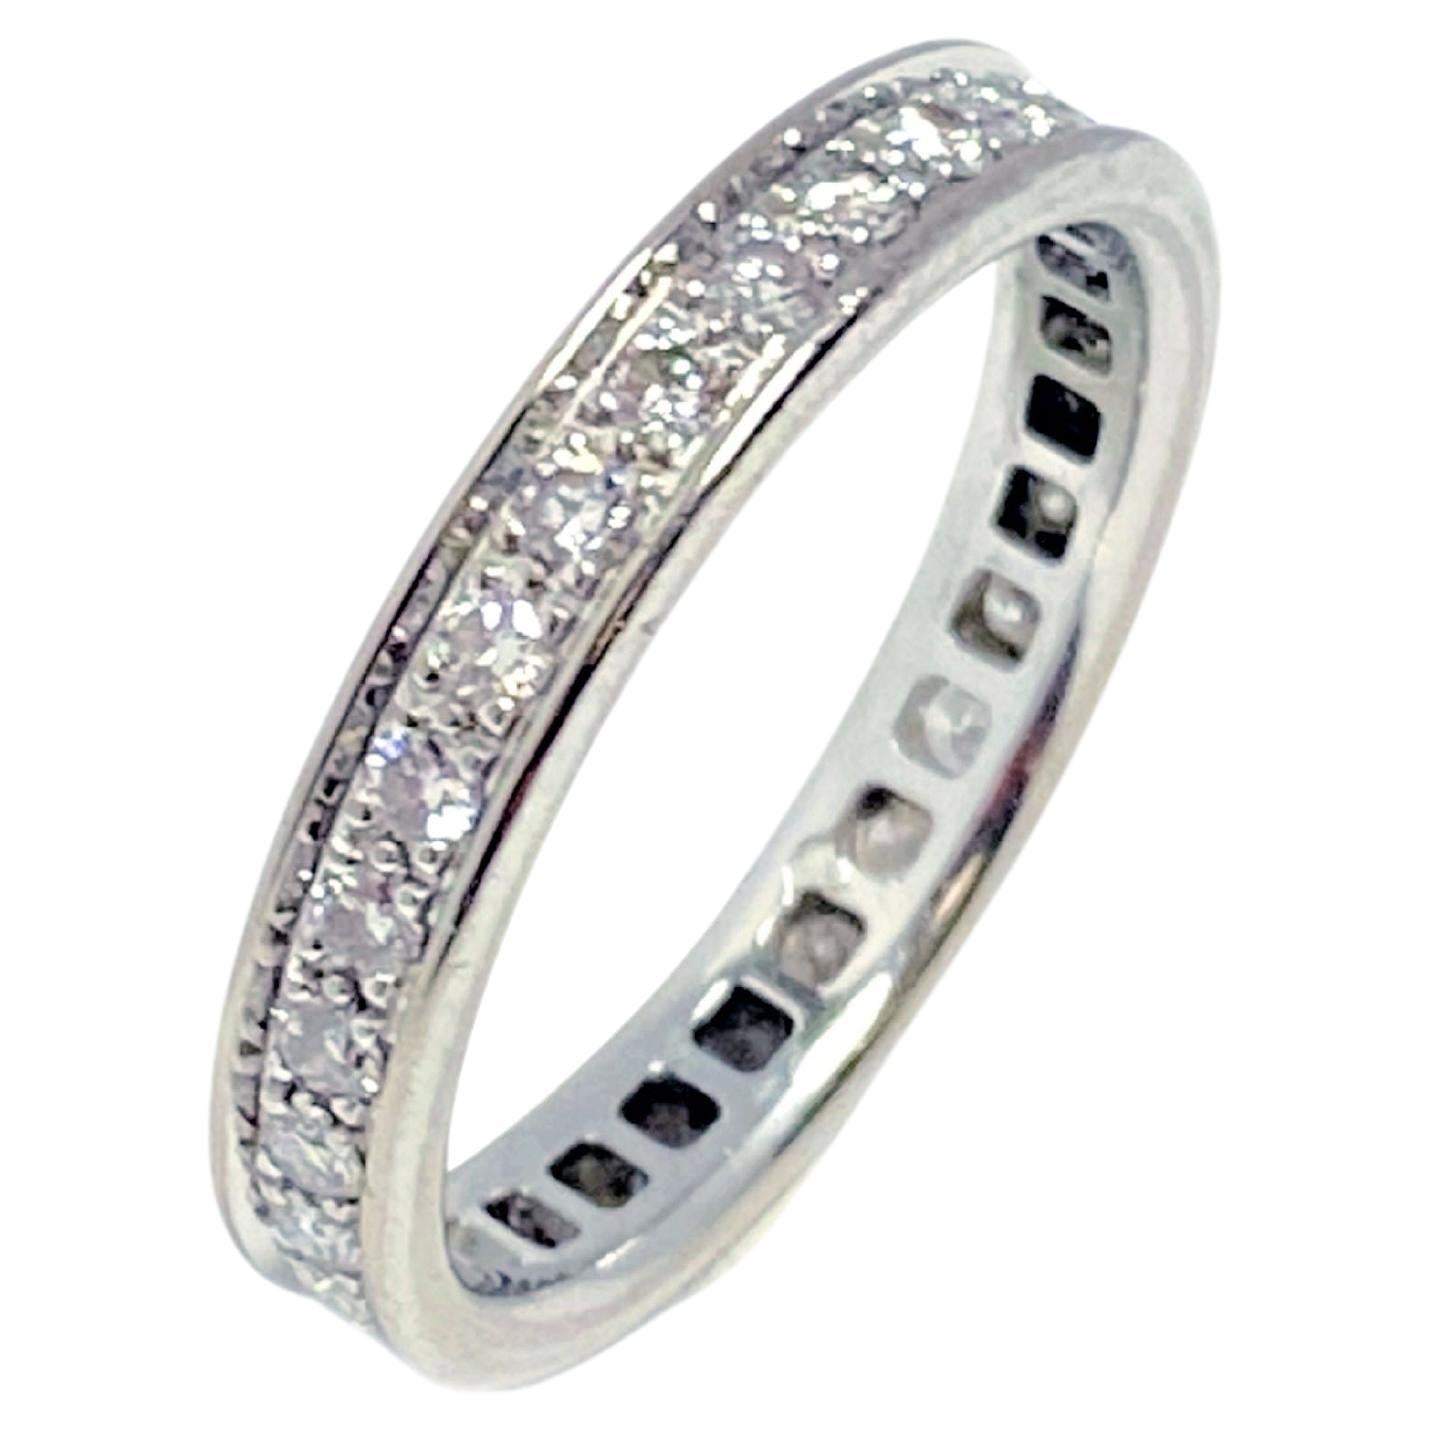 Cartier Platinum Diamond Eternity Band Ring